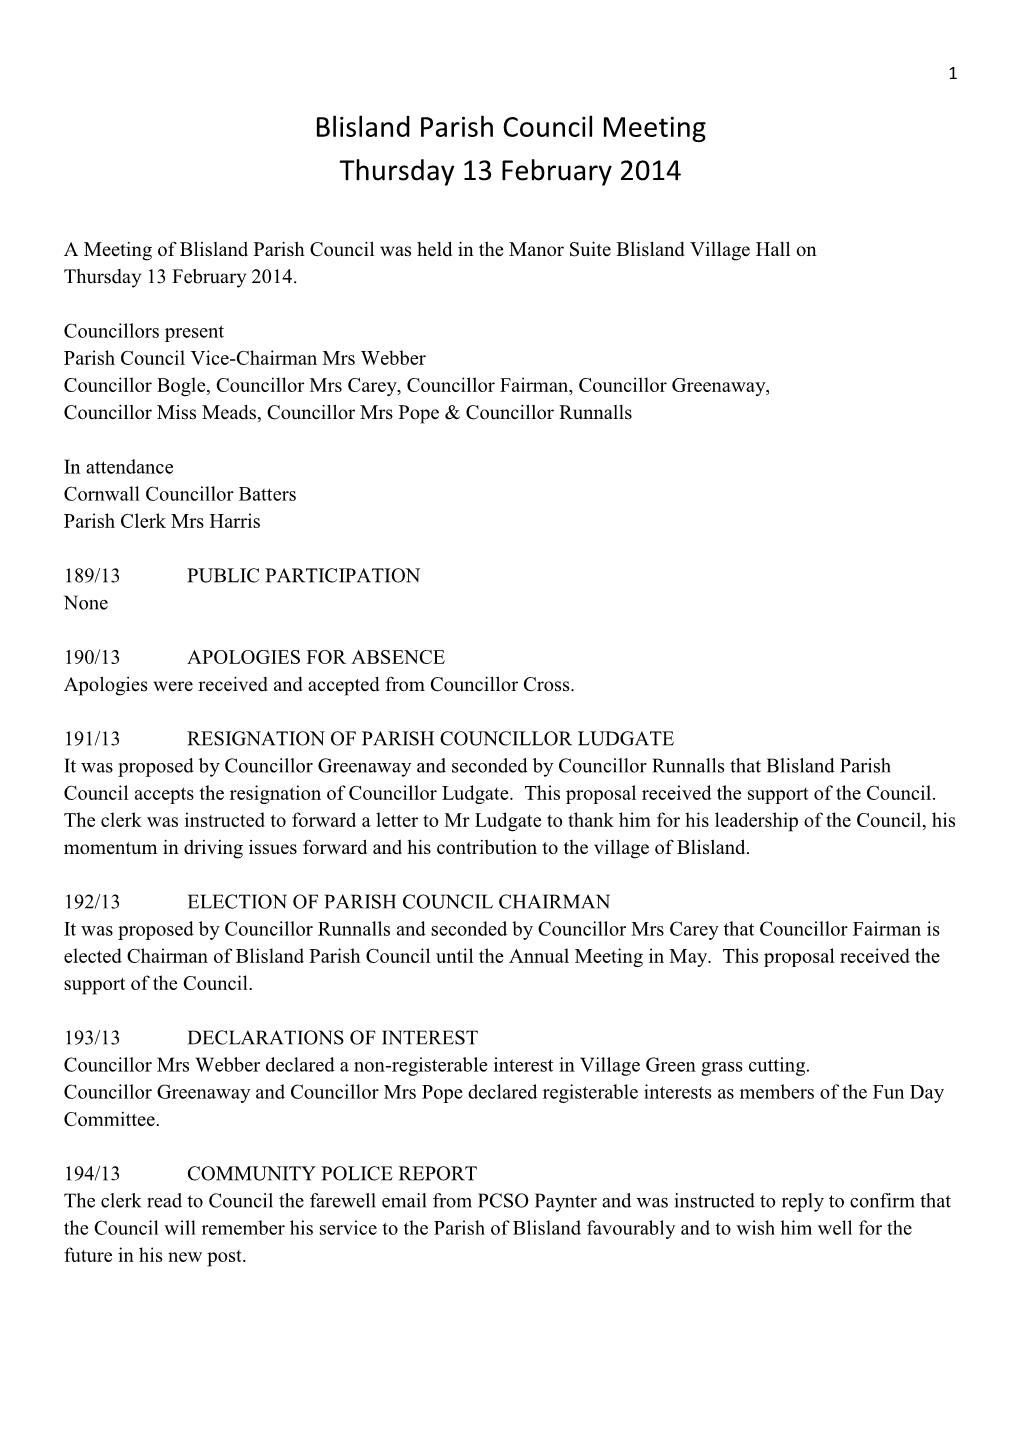 Blisland Parish Council Meeting Thursday 13 February 2014